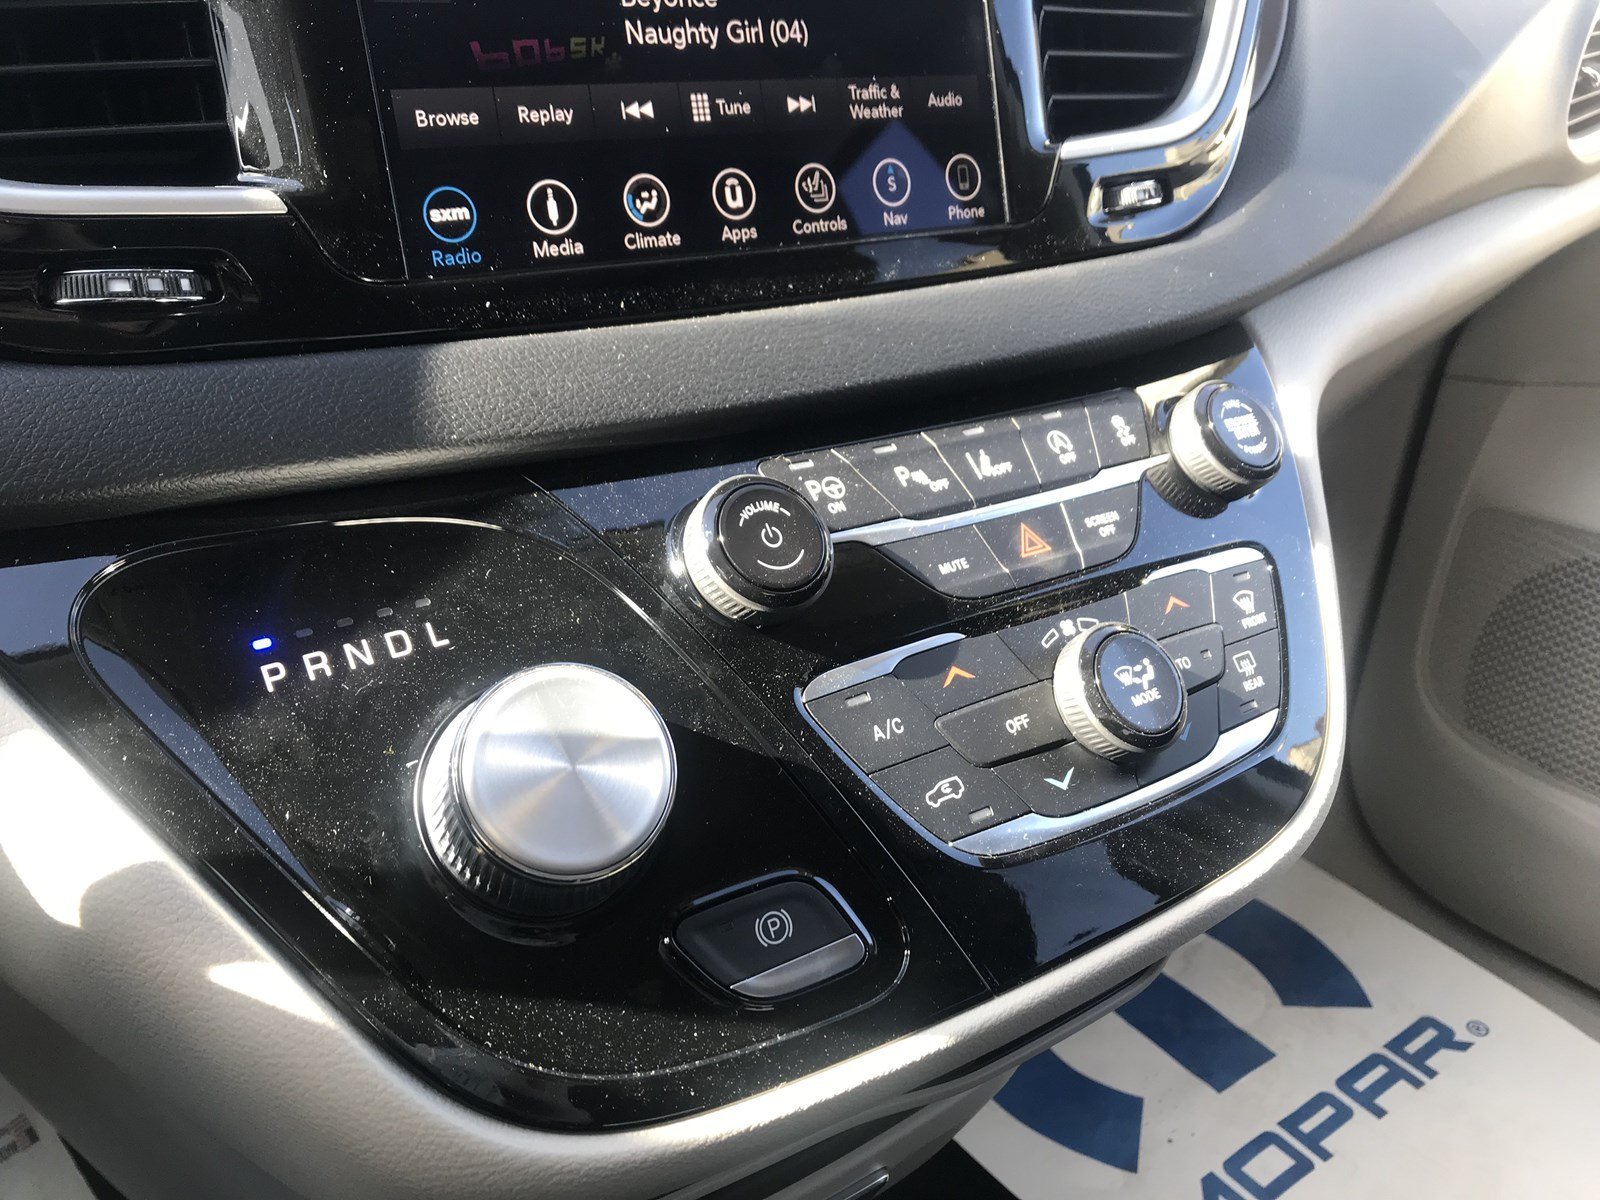 New 2019 Chrysler Pacifica TouringL Navigation DVD